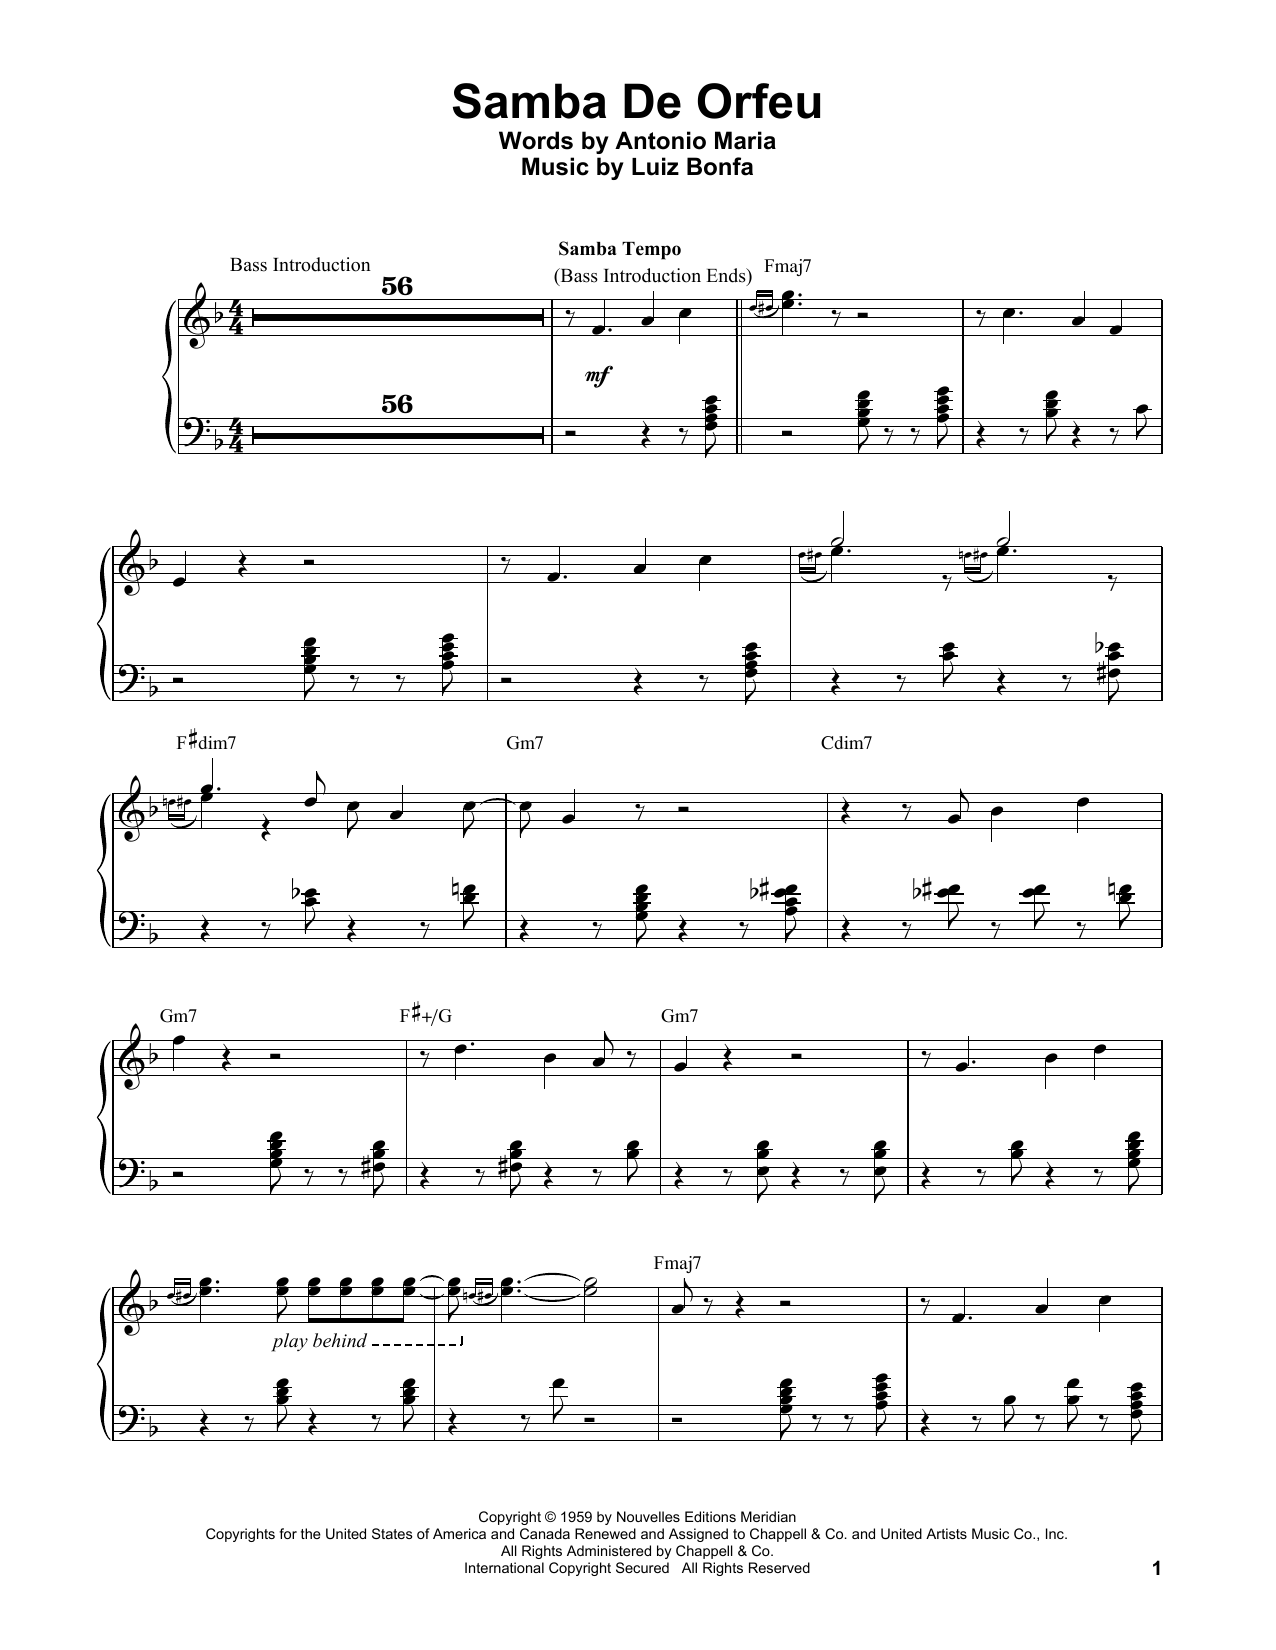 Vince Guaraldi Samba De Orfeu Sheet Music Notes & Chords for Piano Transcription - Download or Print PDF